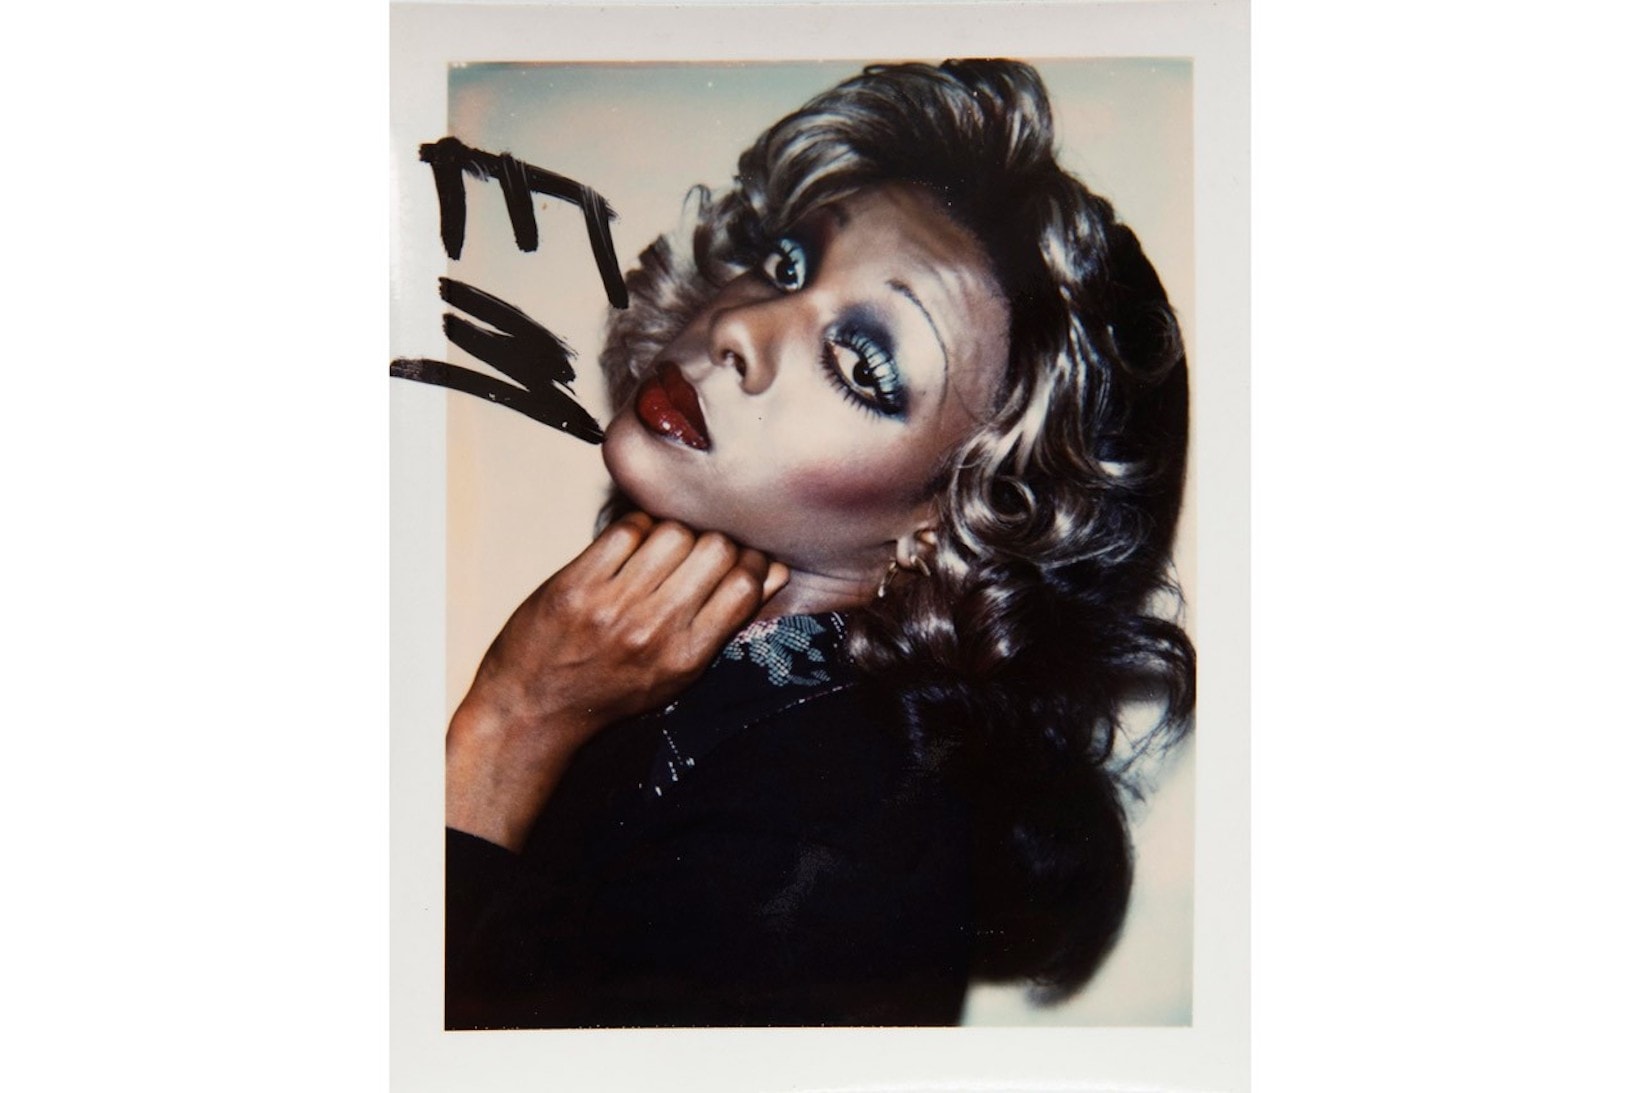 andy warhol photographs exhibition fotografiska new york hedges projects pride month lgbtq marsha p johnson drag queen